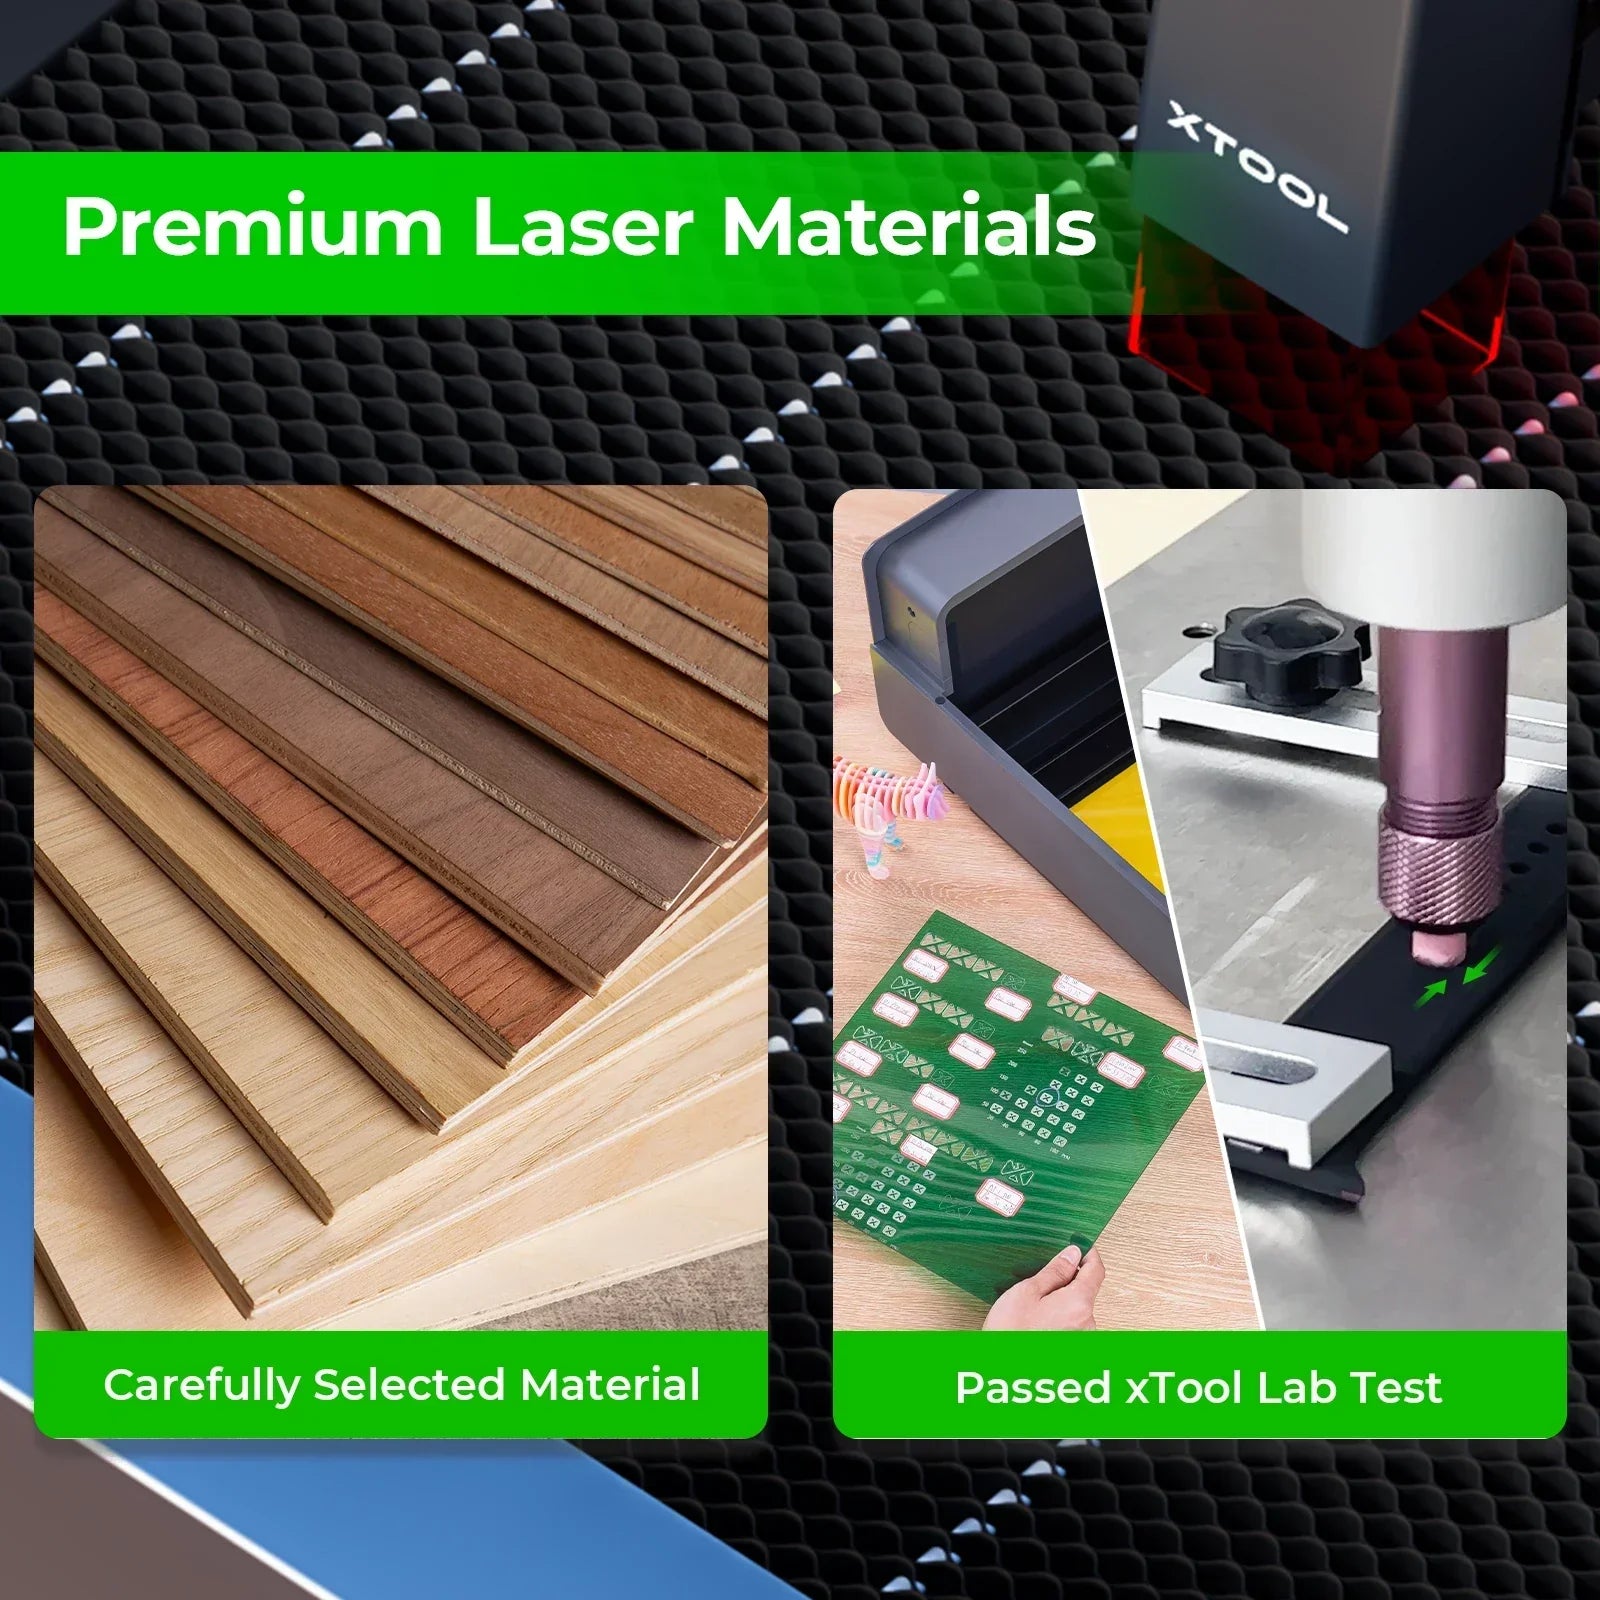 Ultimatives Lasermaterial-Kit (159 Stk.)